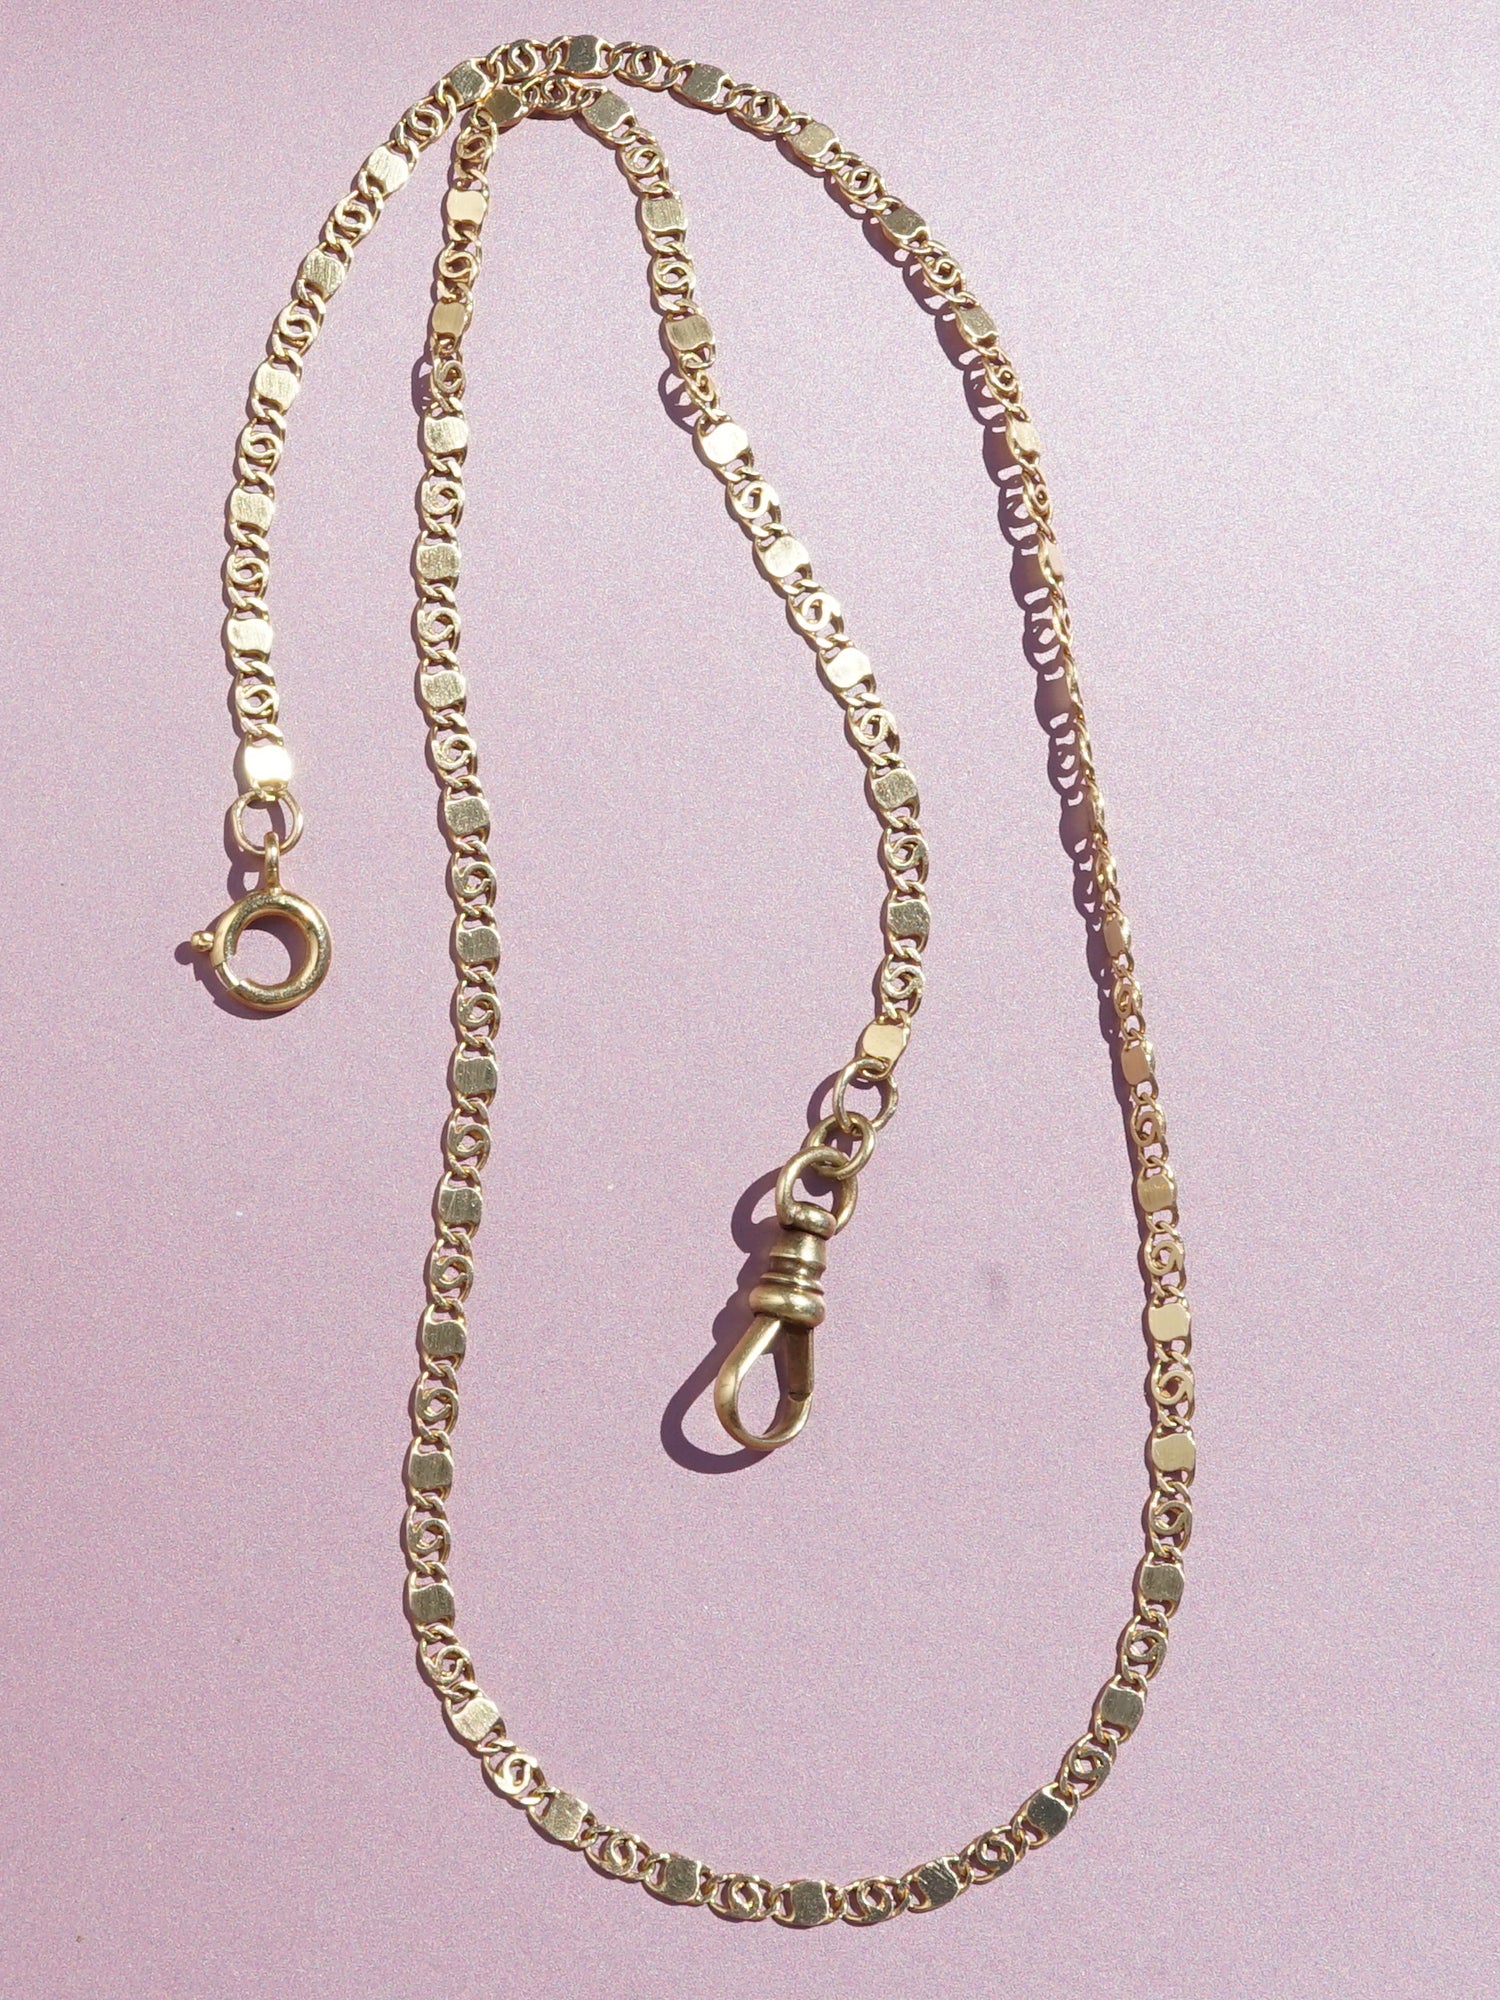 Unique Fob Chain Necklace